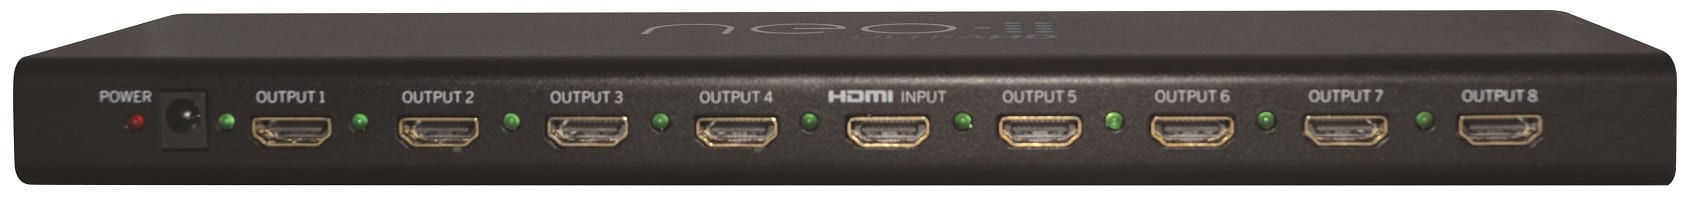 Pulse Eight neo:1×8 HDMI splitter - voorkant - HDMI splitter